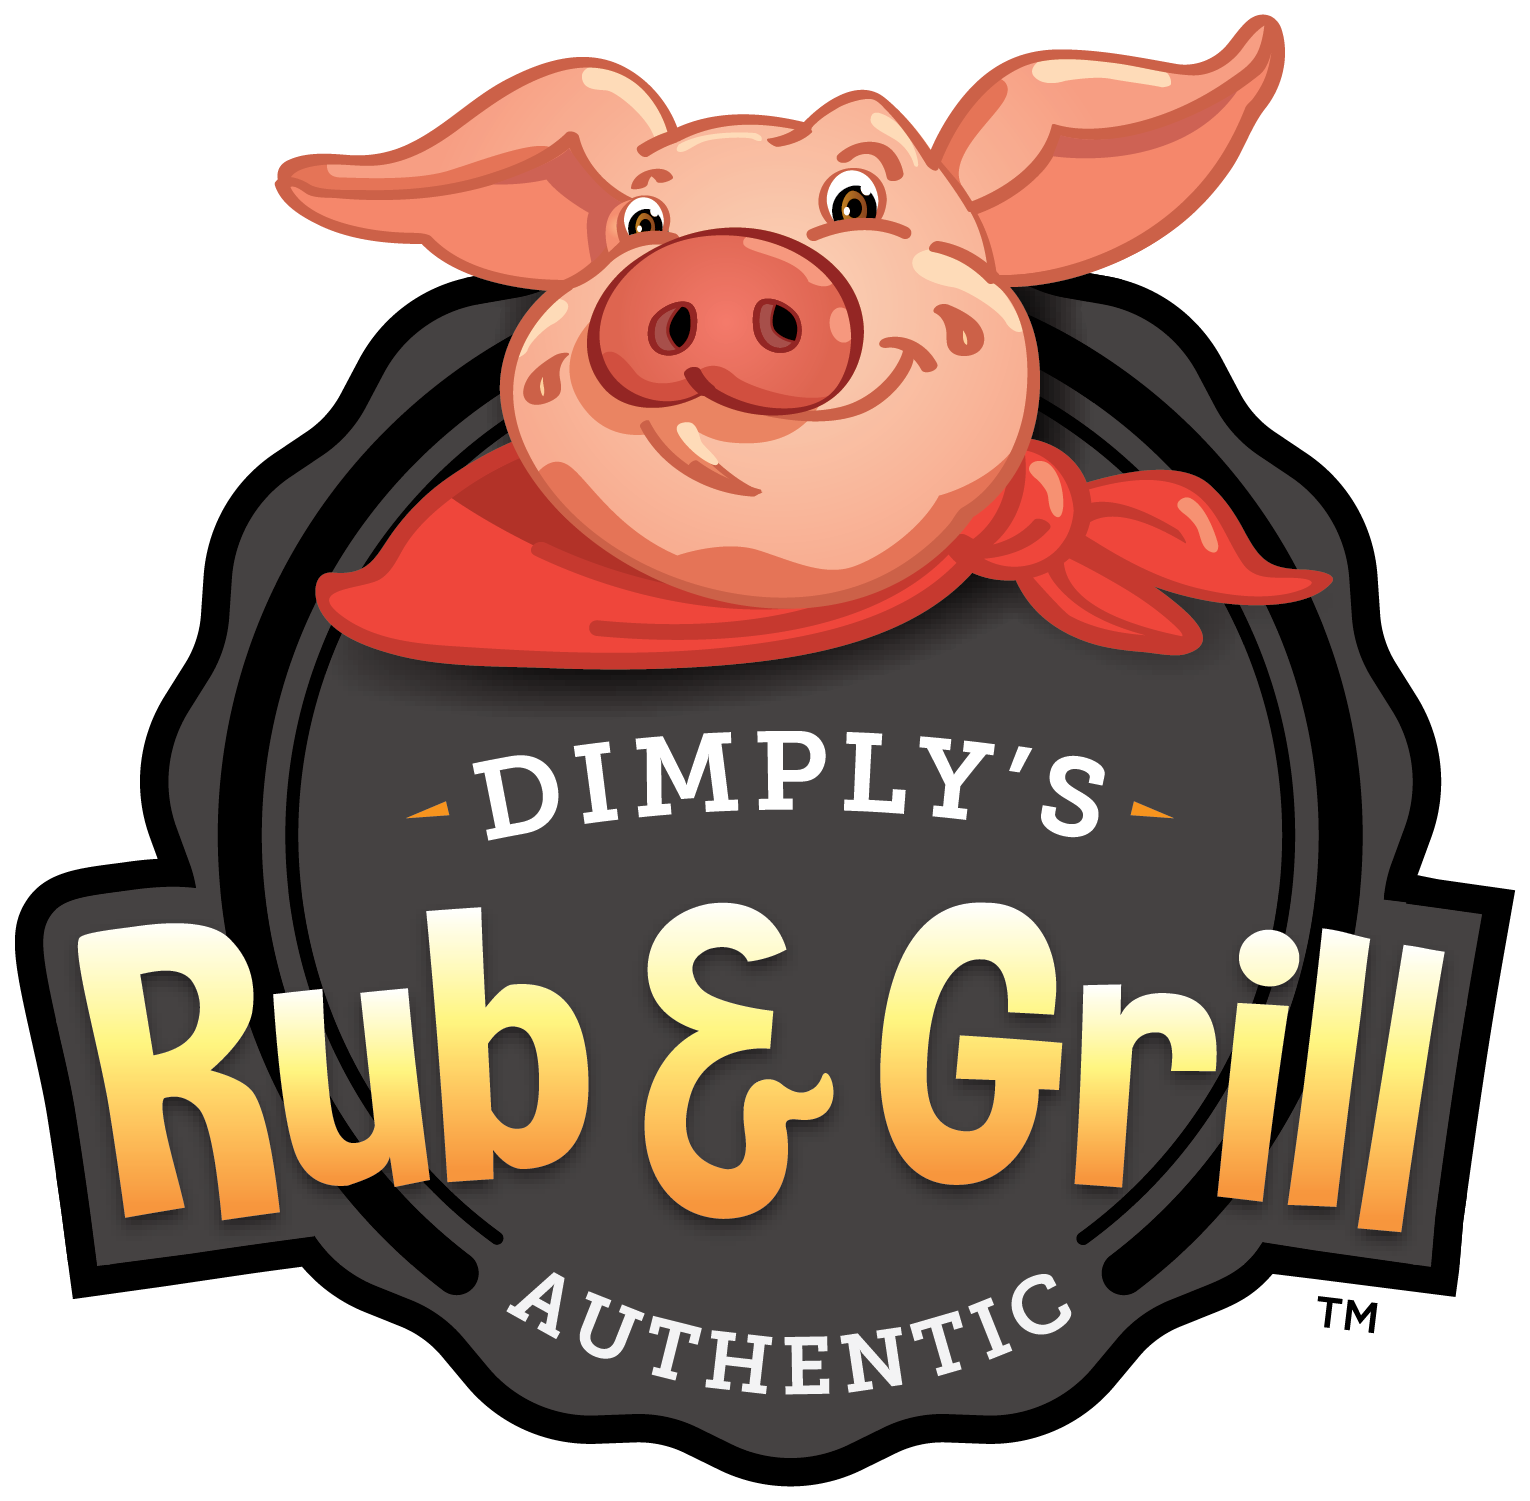 Dimply's Rub & Grill